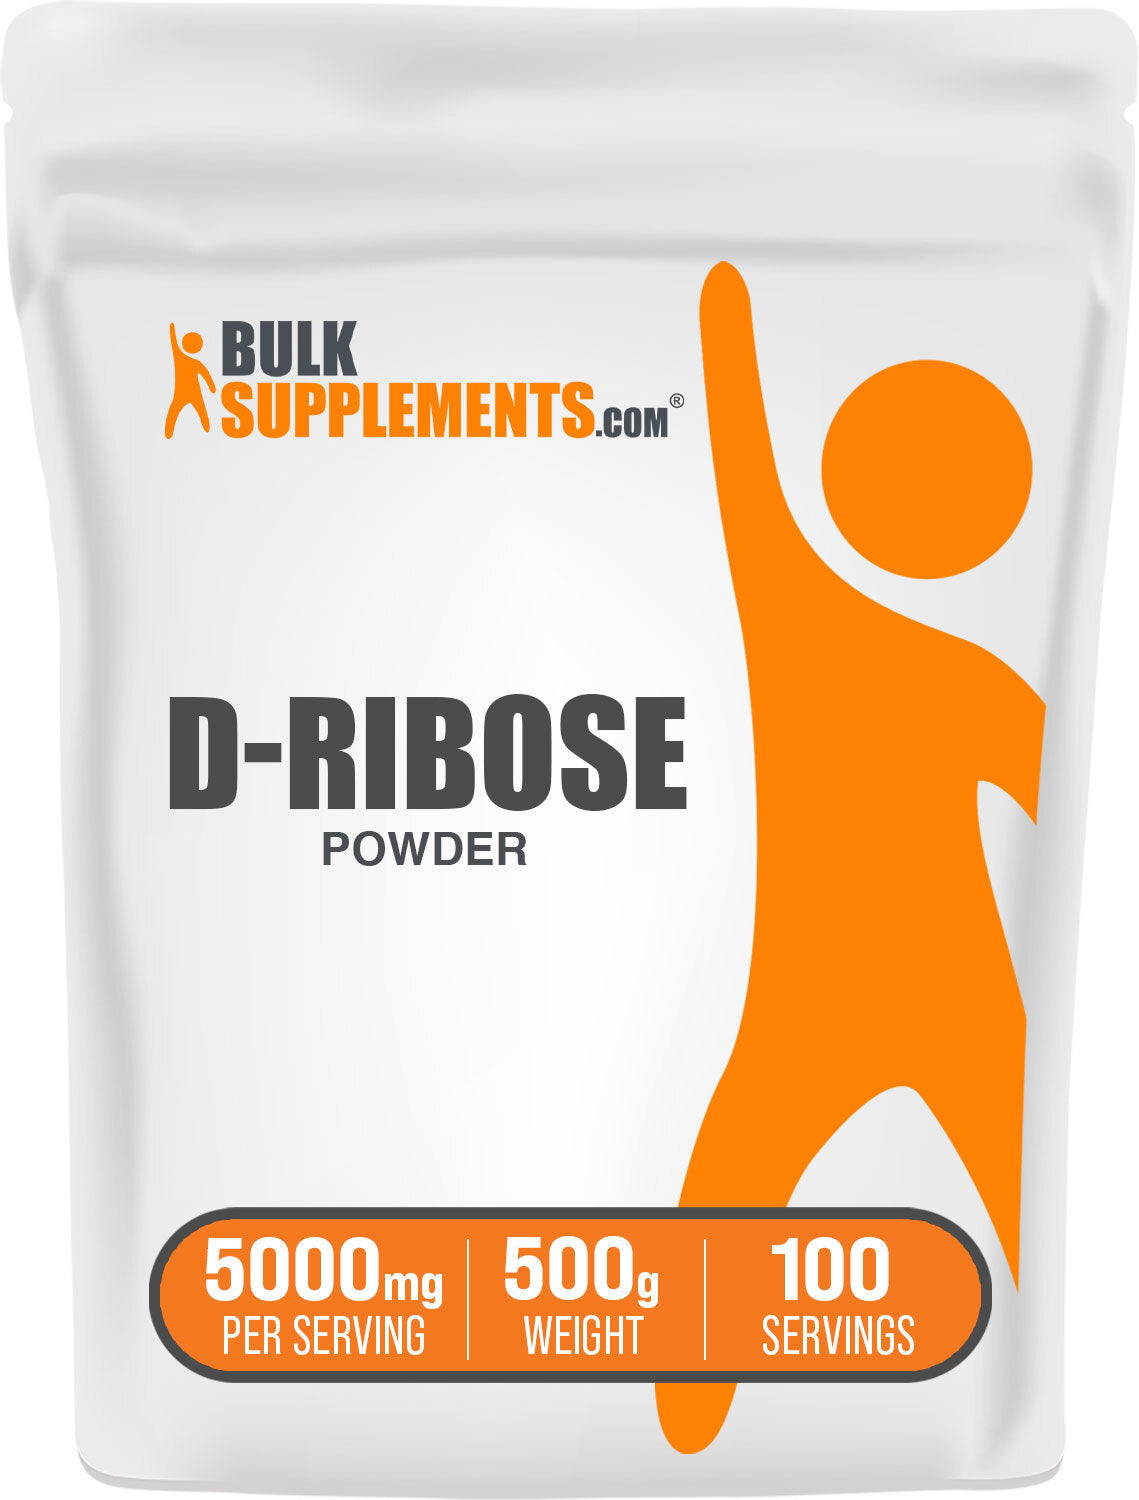 BulkSupplements.com D-Ribose Powder 500g bag